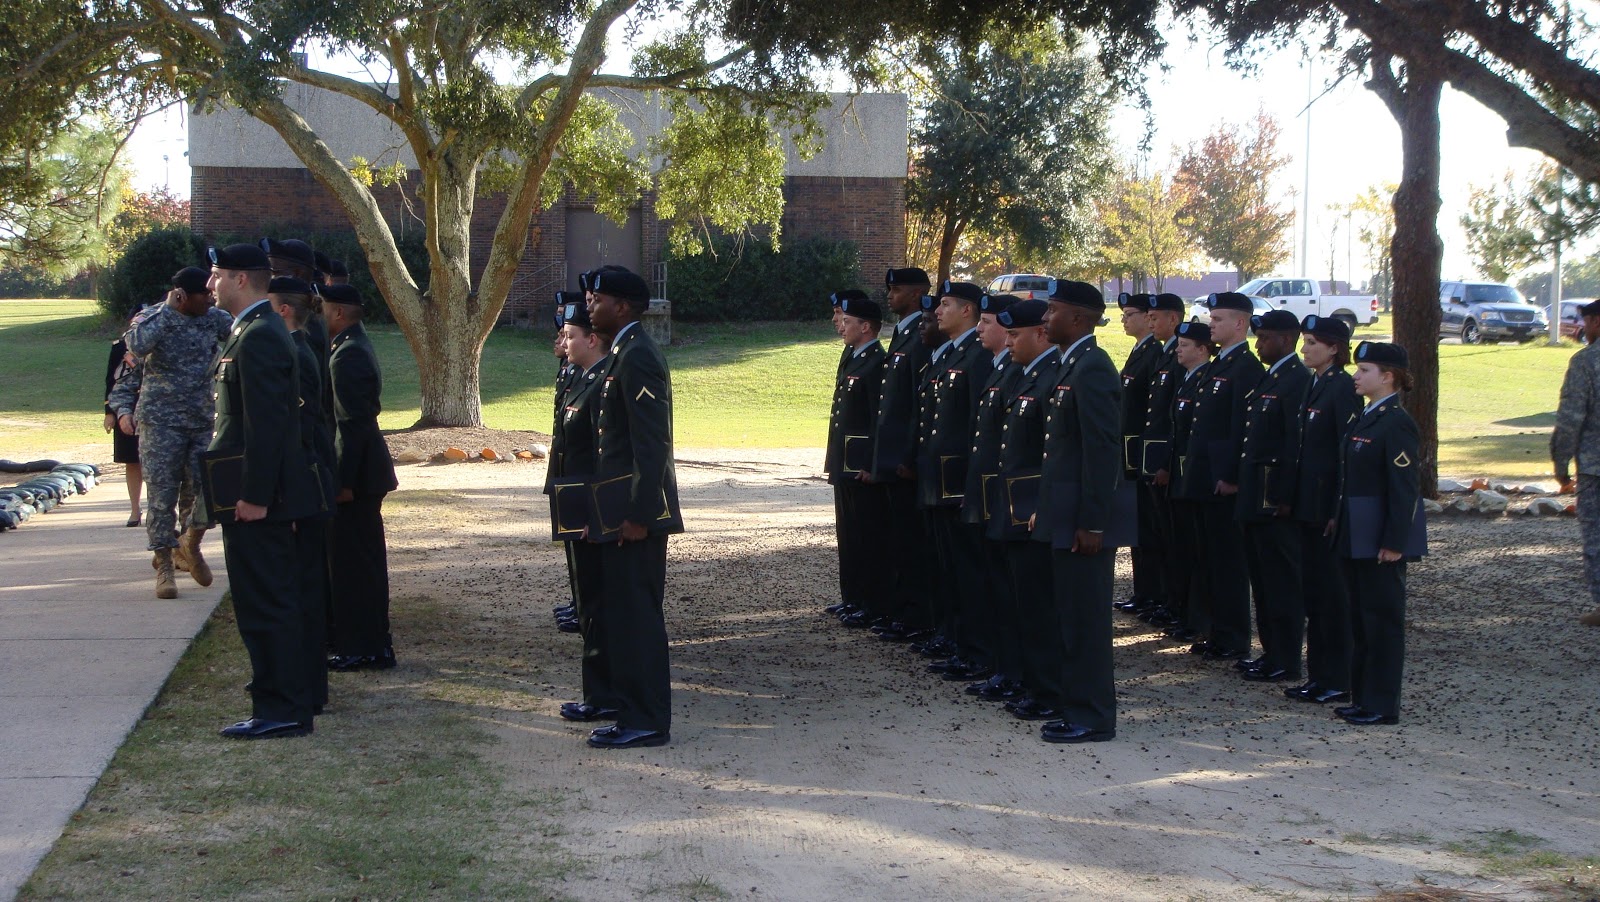 My Army Experience Graduation Photos (AIT Fort Gordon)